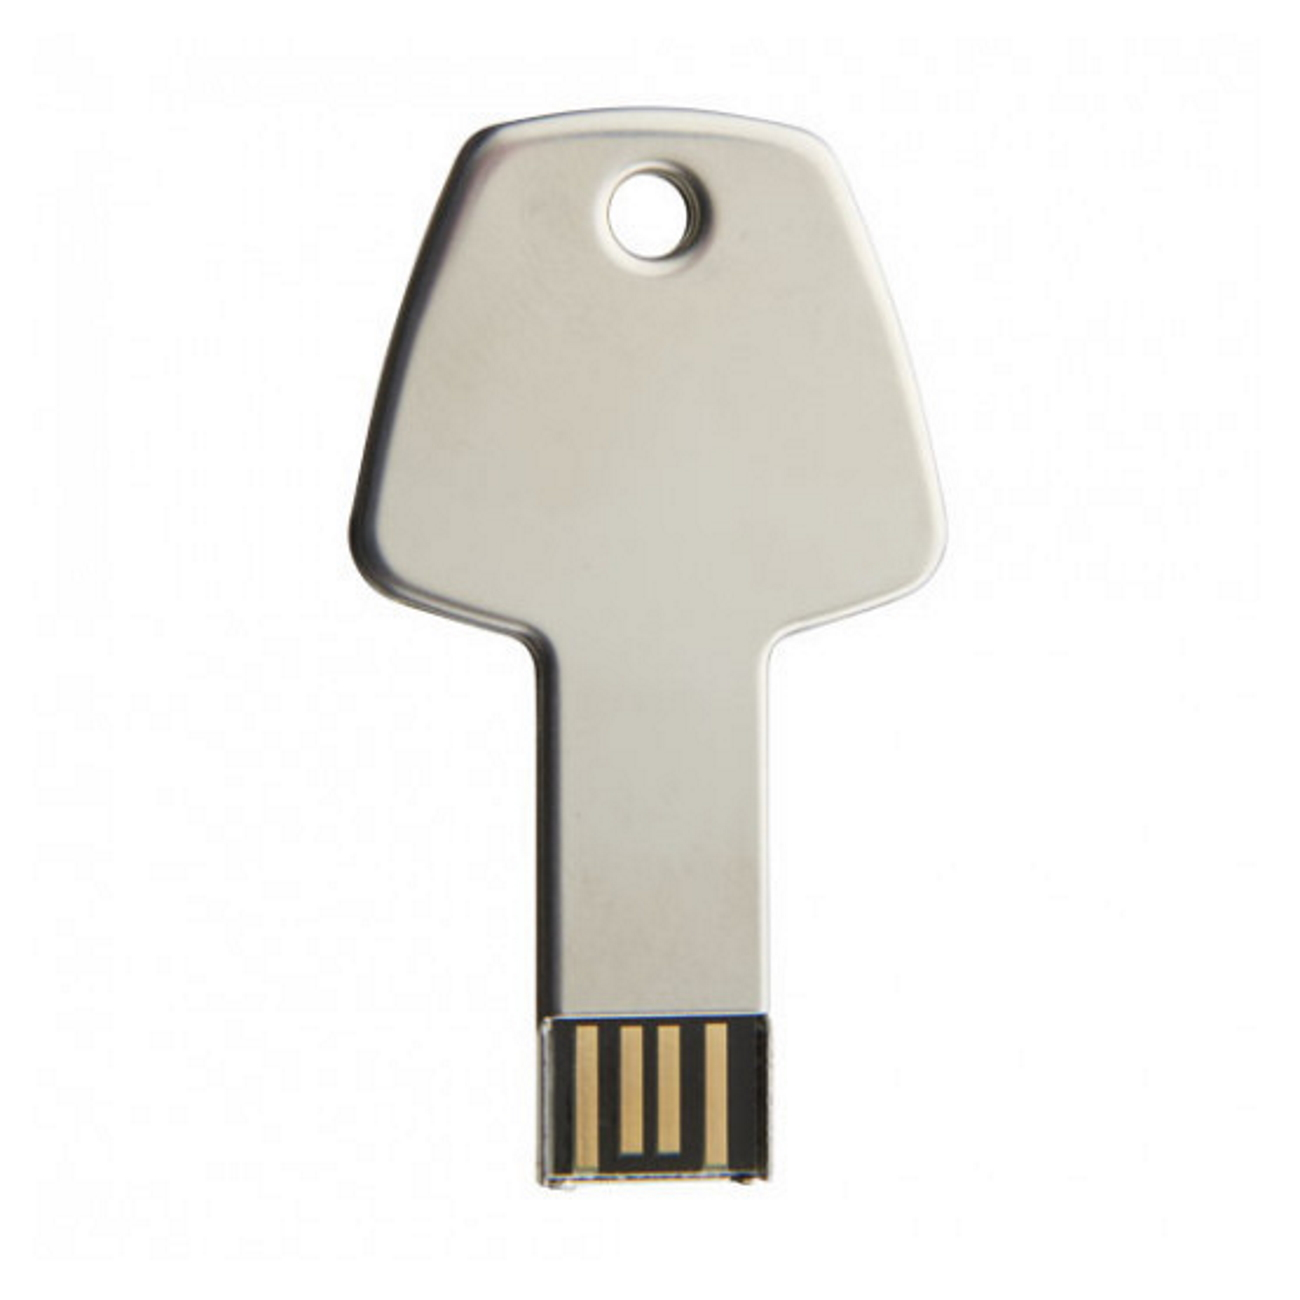 USB GERMANY (Silber, ®Schlüssel USB-Stick GB) 4 Key